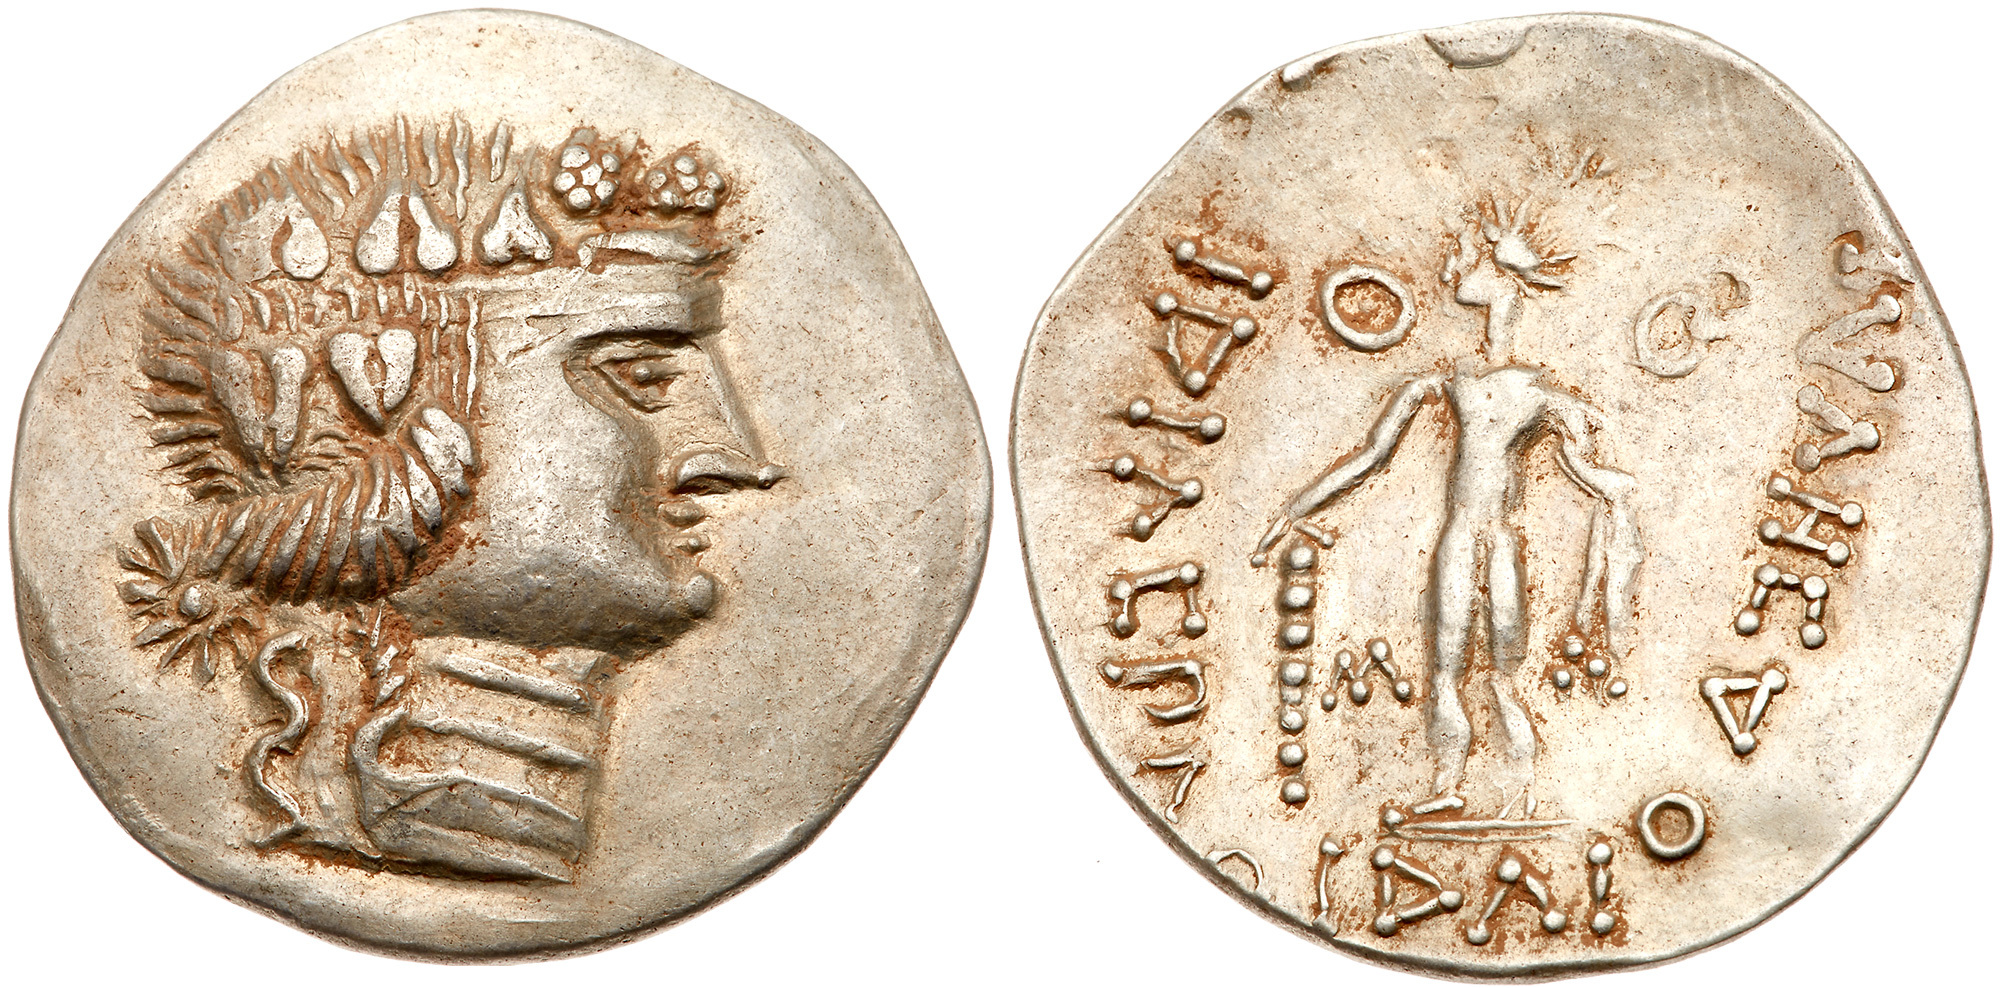 Lower Danube, Imitating Thasos. Silver Tetradrachm (17.26 g), 1st century BC. Wreathed head of